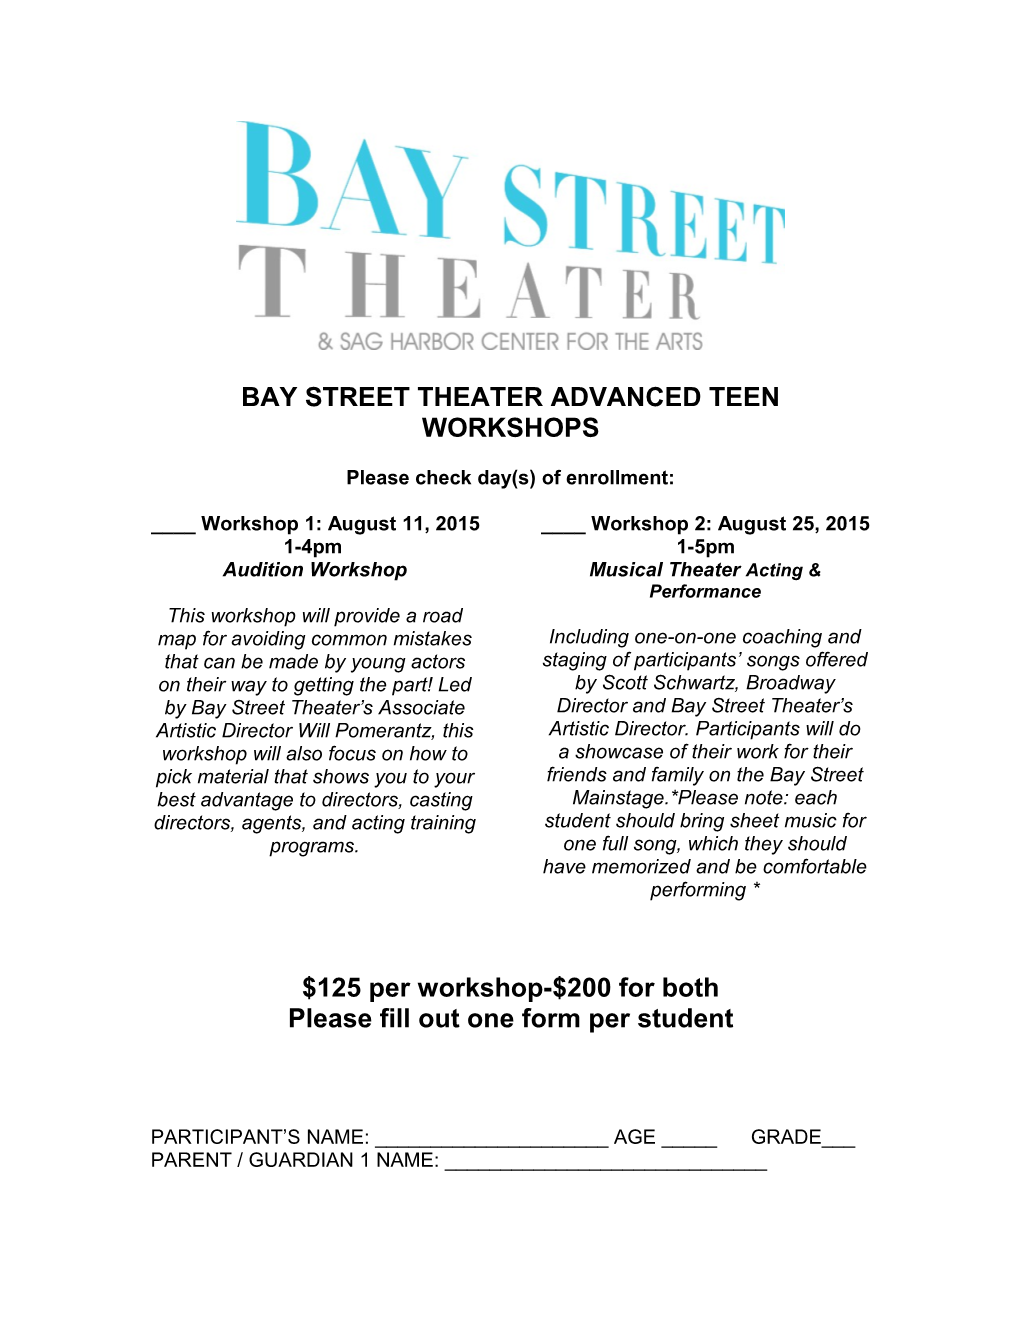 Bay Street Theater Advanced Teen Workshops